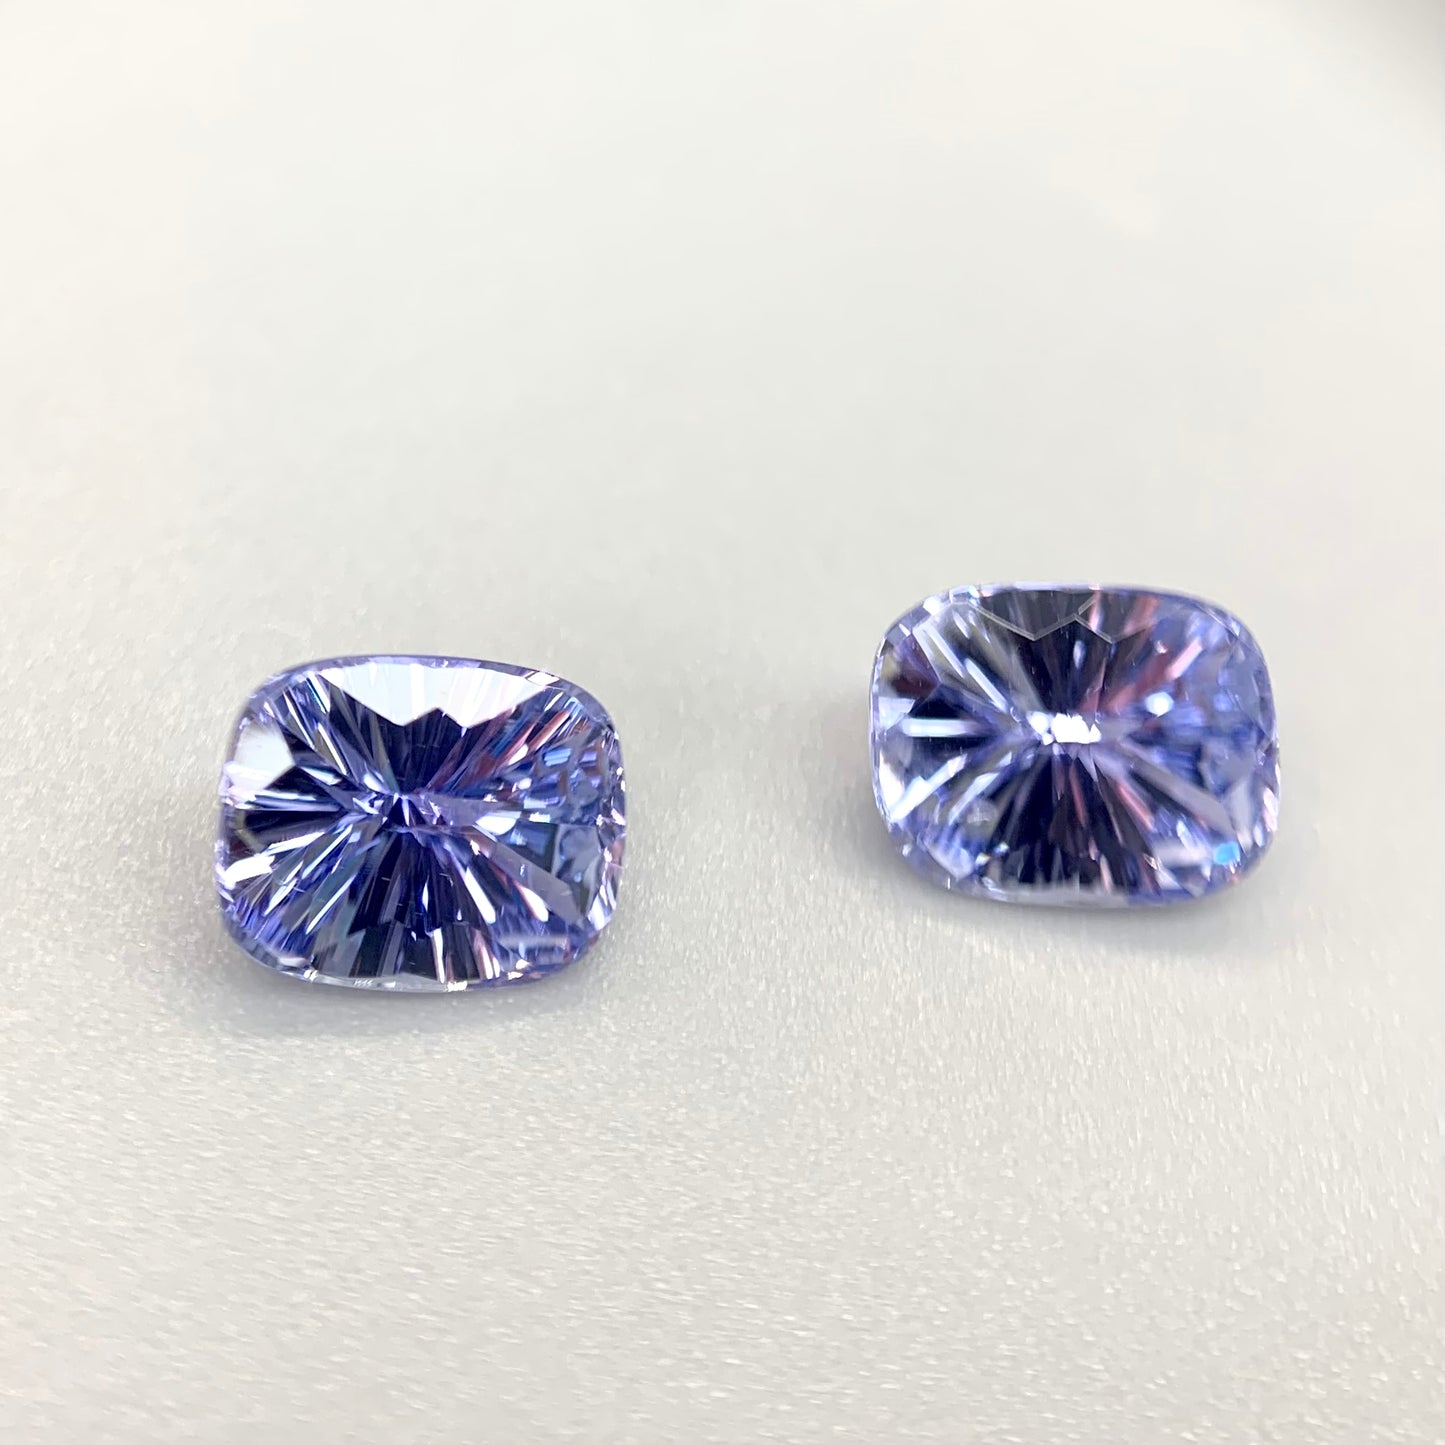 Pair of Concave cut Blue Sapphires 3.18tcw